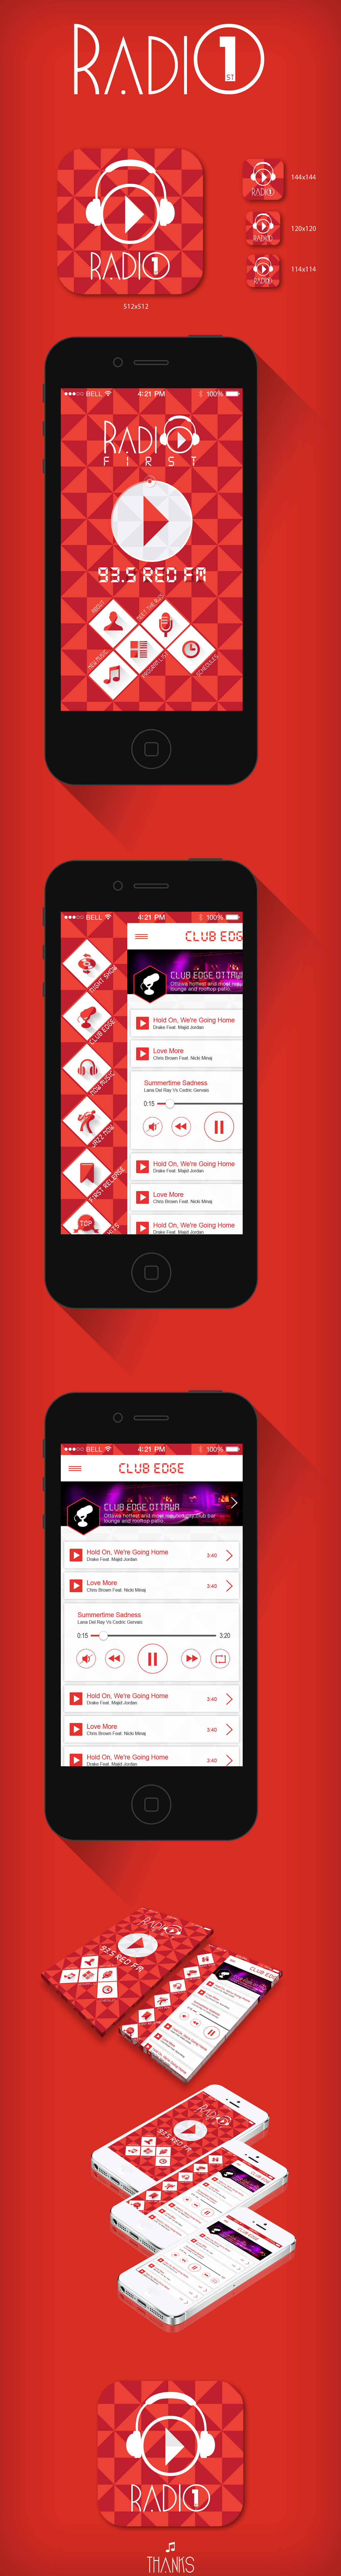 music app iphone Radio songs iPad android Music Player